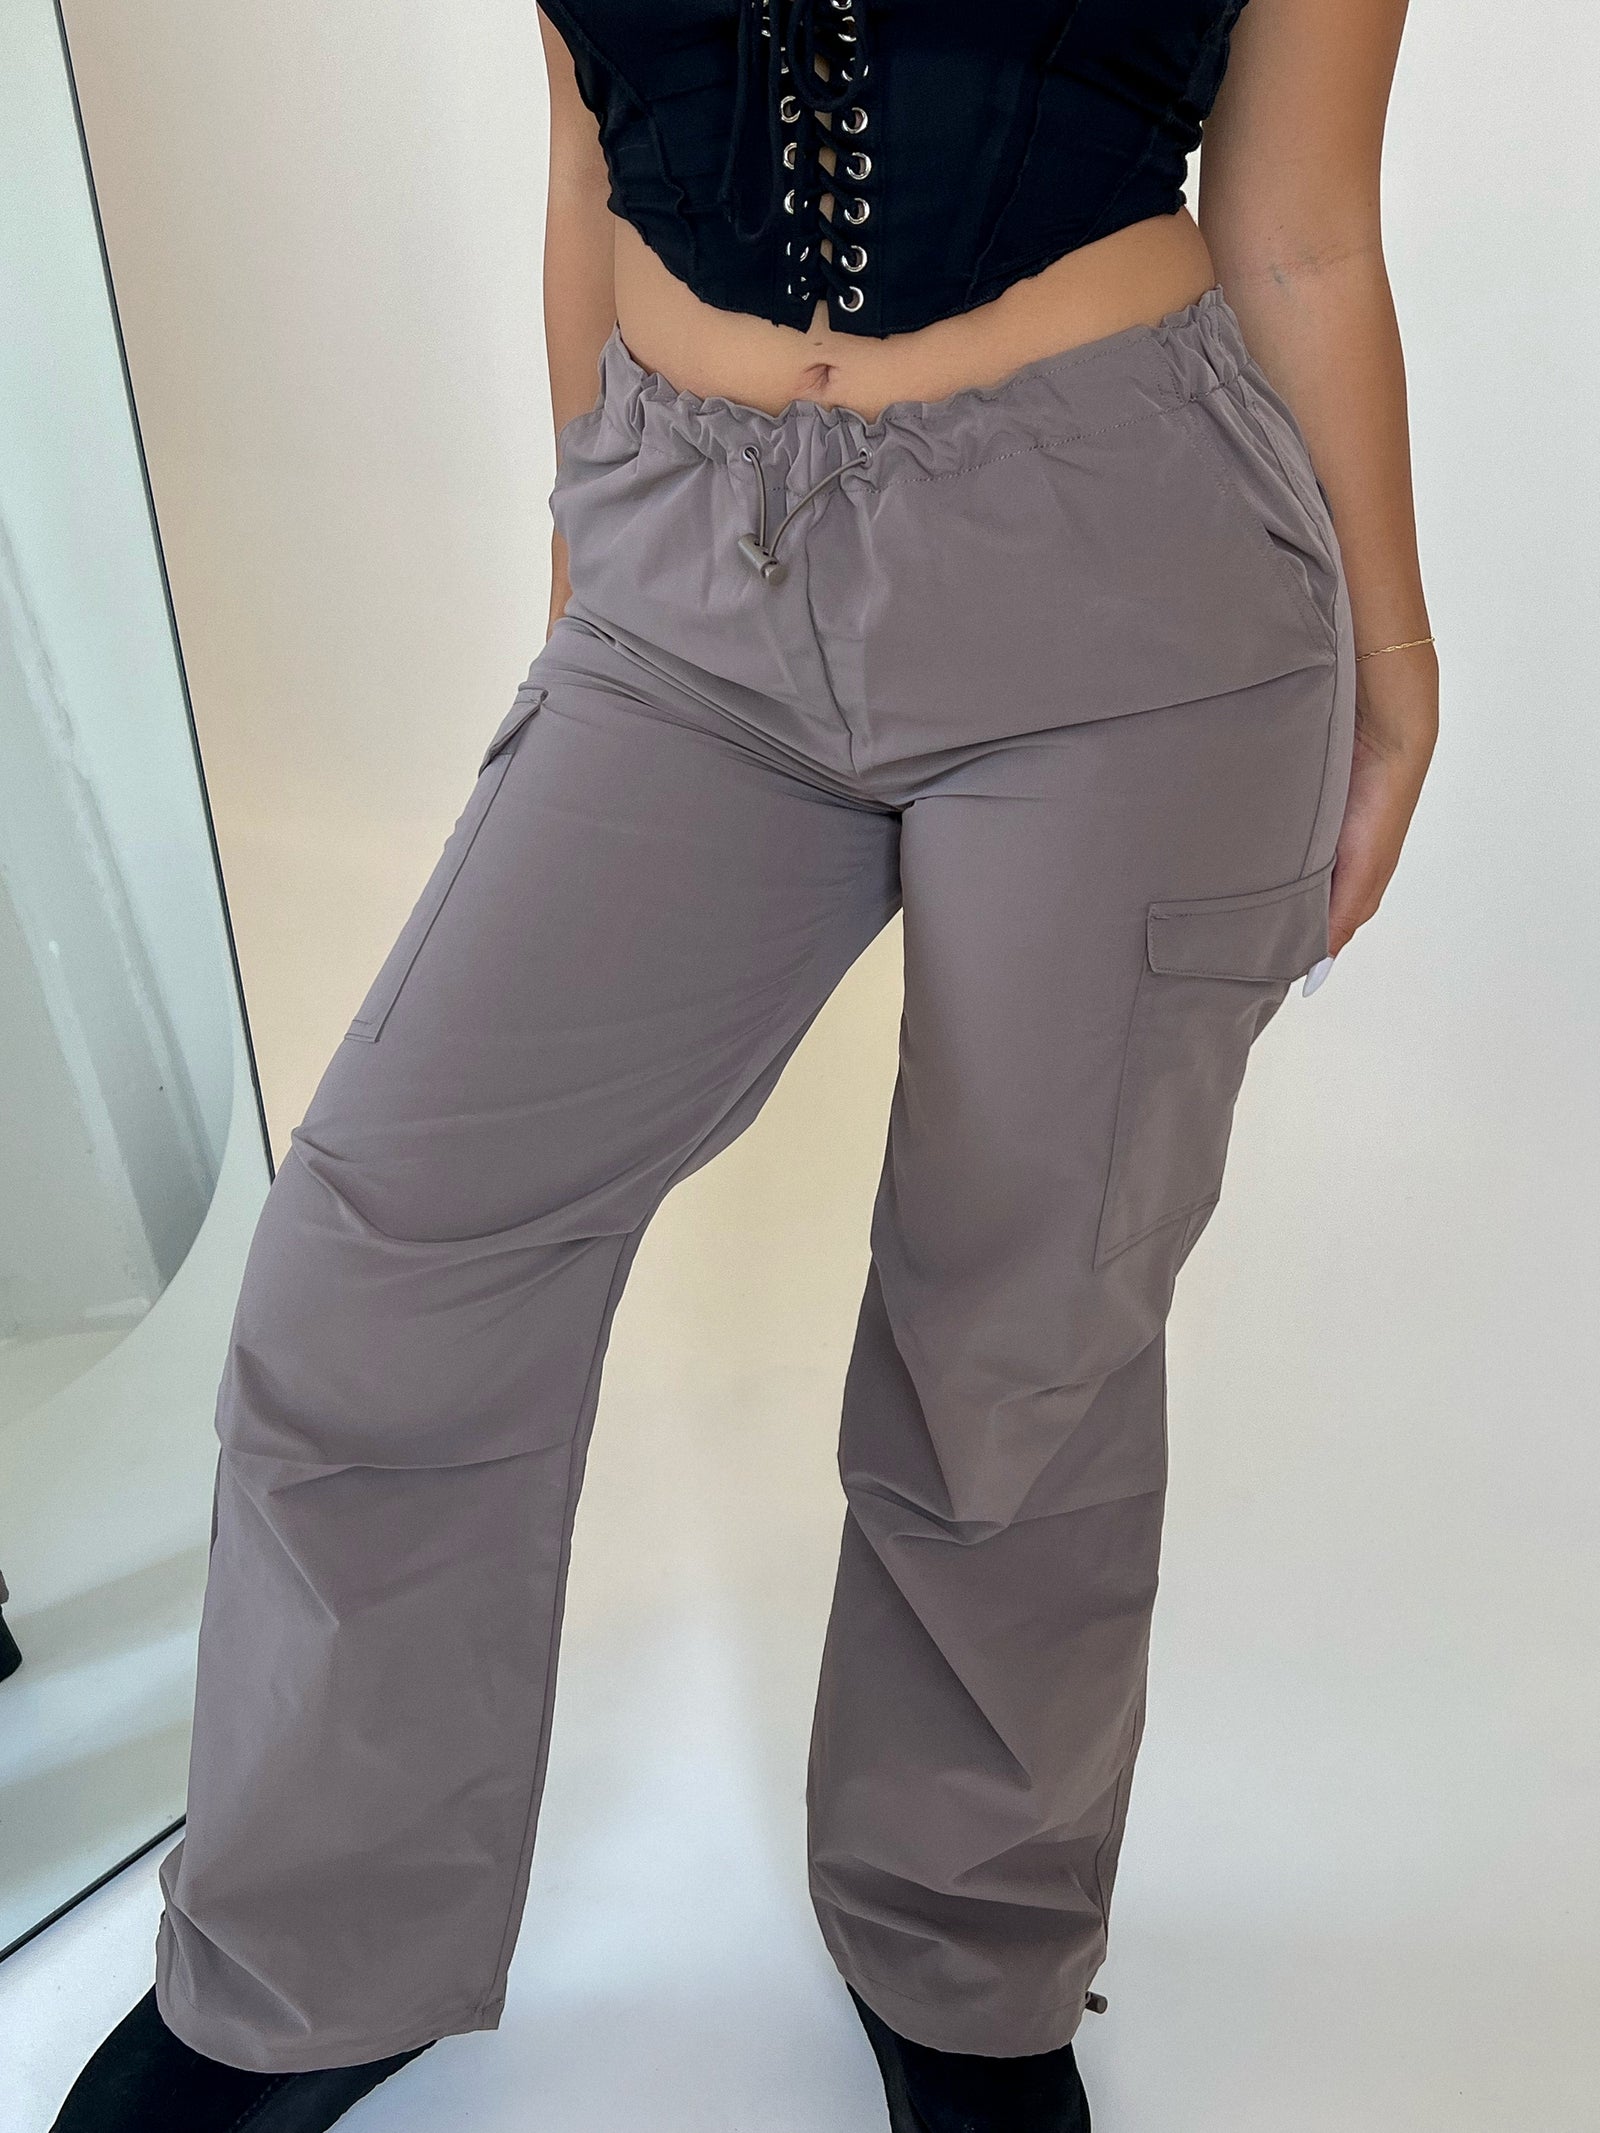 Jocelyn Cargo Pants (Fuchsia) - Laura's Boutique, Inc